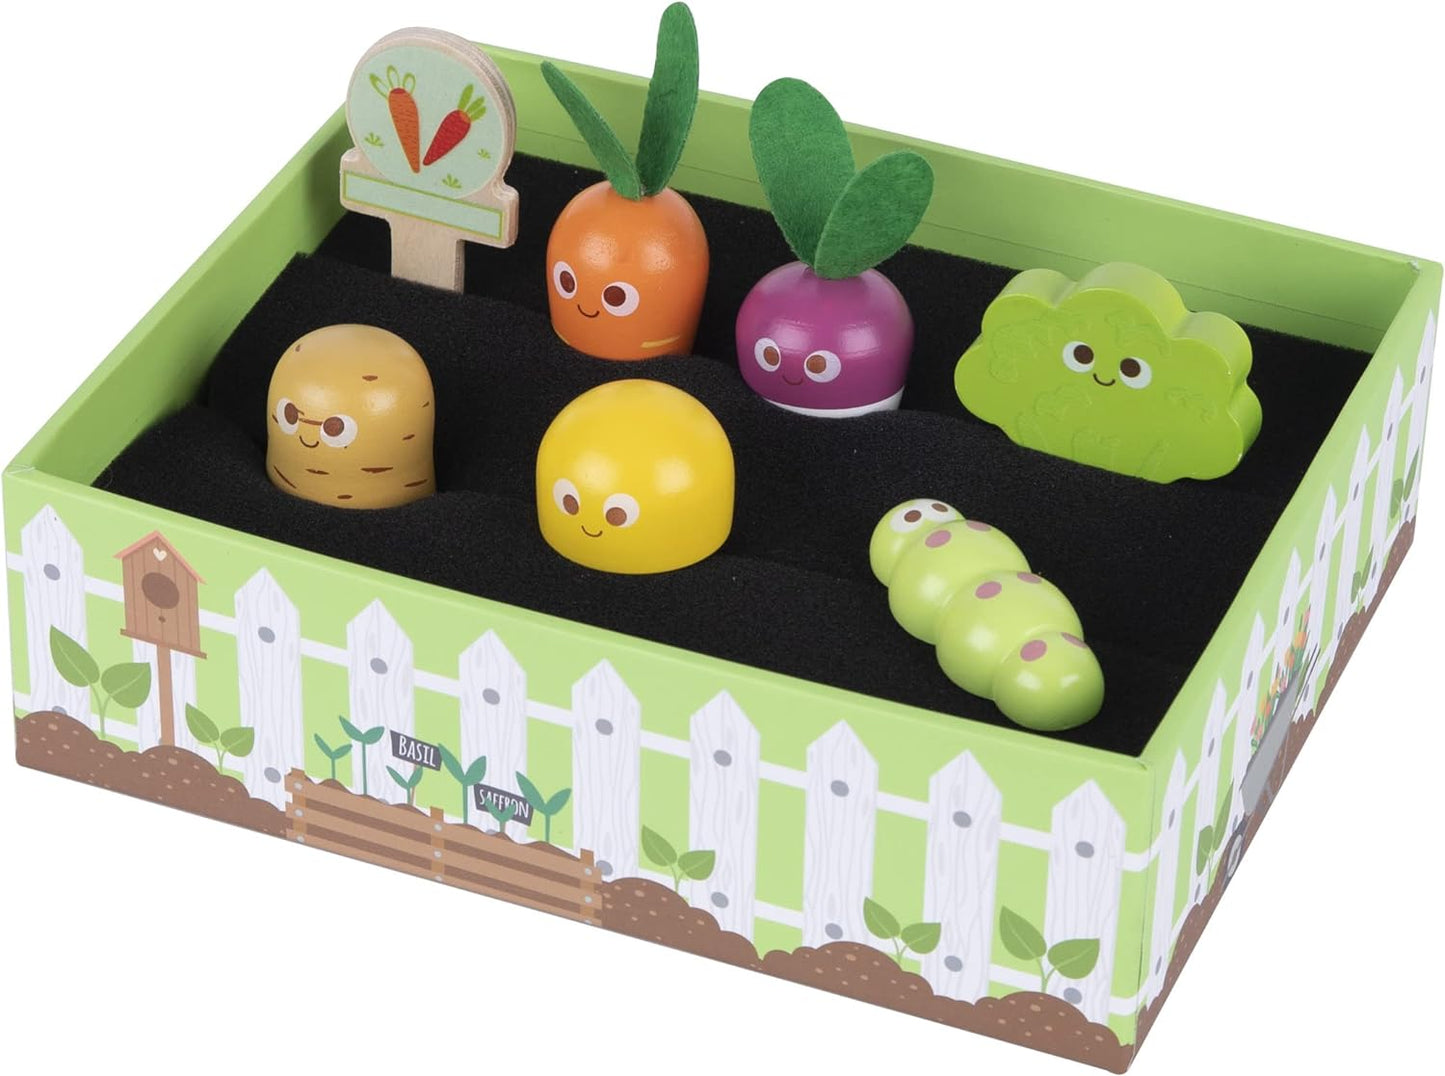 Wooden My Little Veg Garden - 14 Piece Pretend Playset by Tooky Toy 